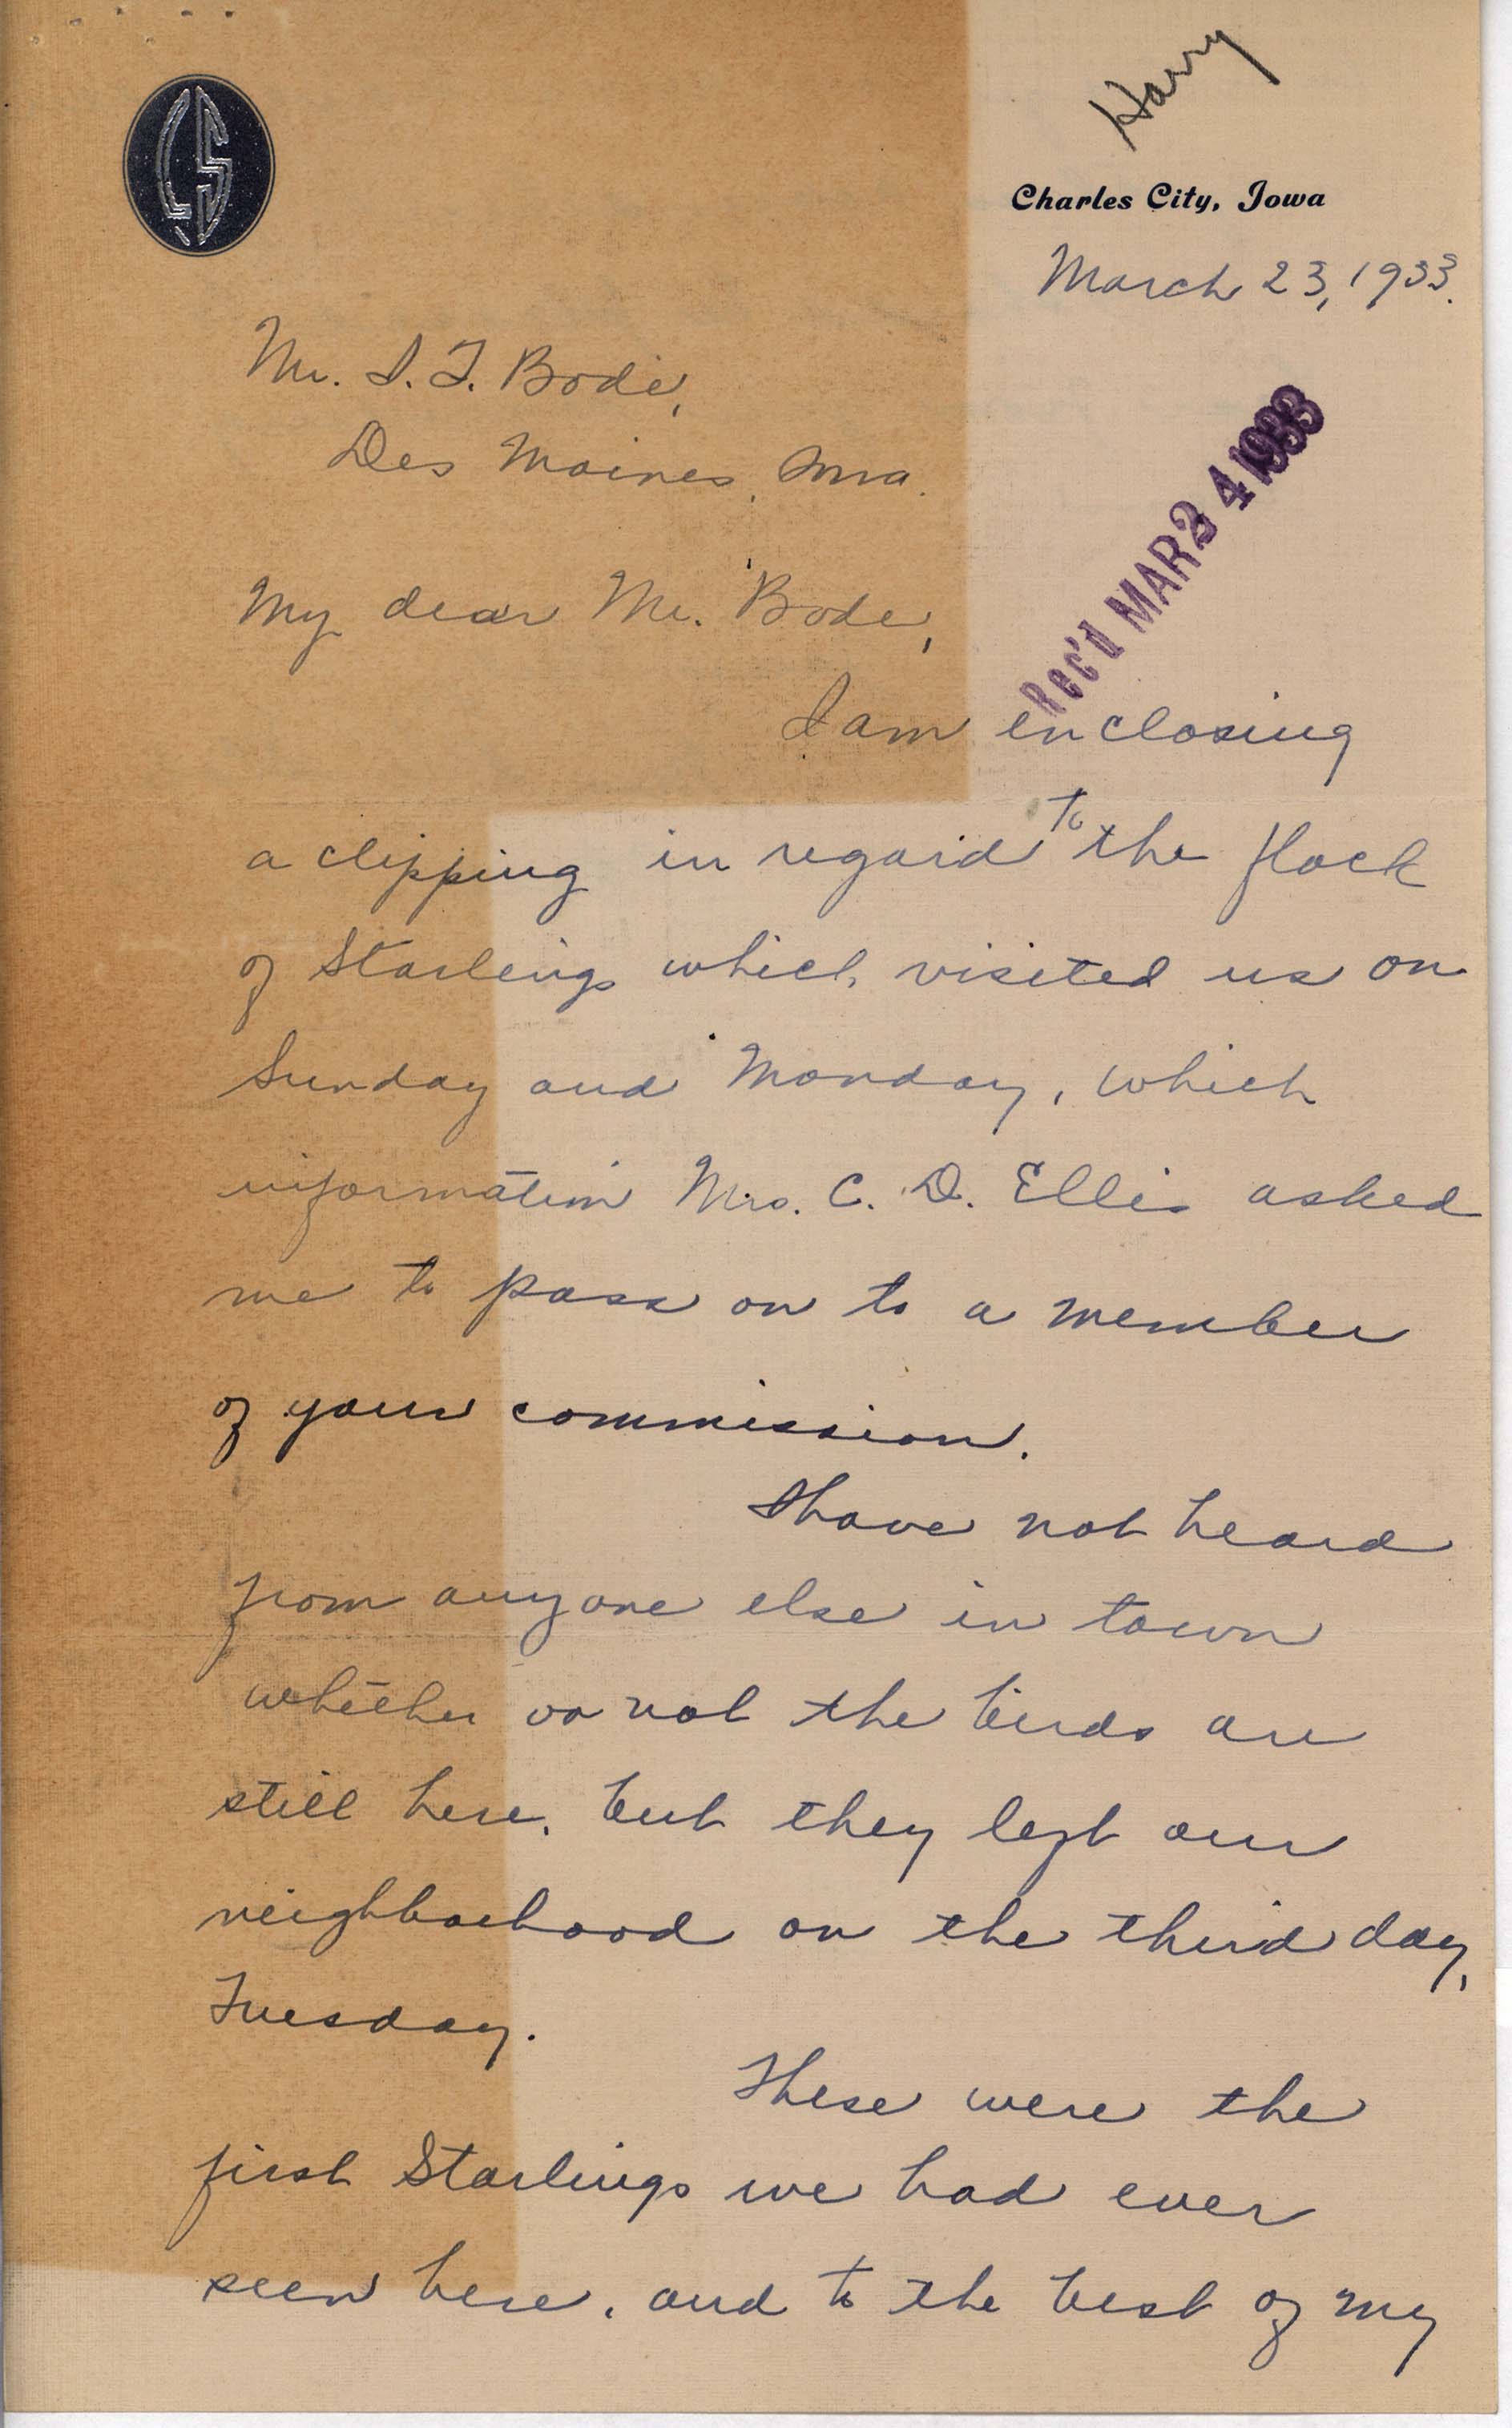 Lillian Stober letter to Irwin Bode regarding Starlings, March 23, 1933